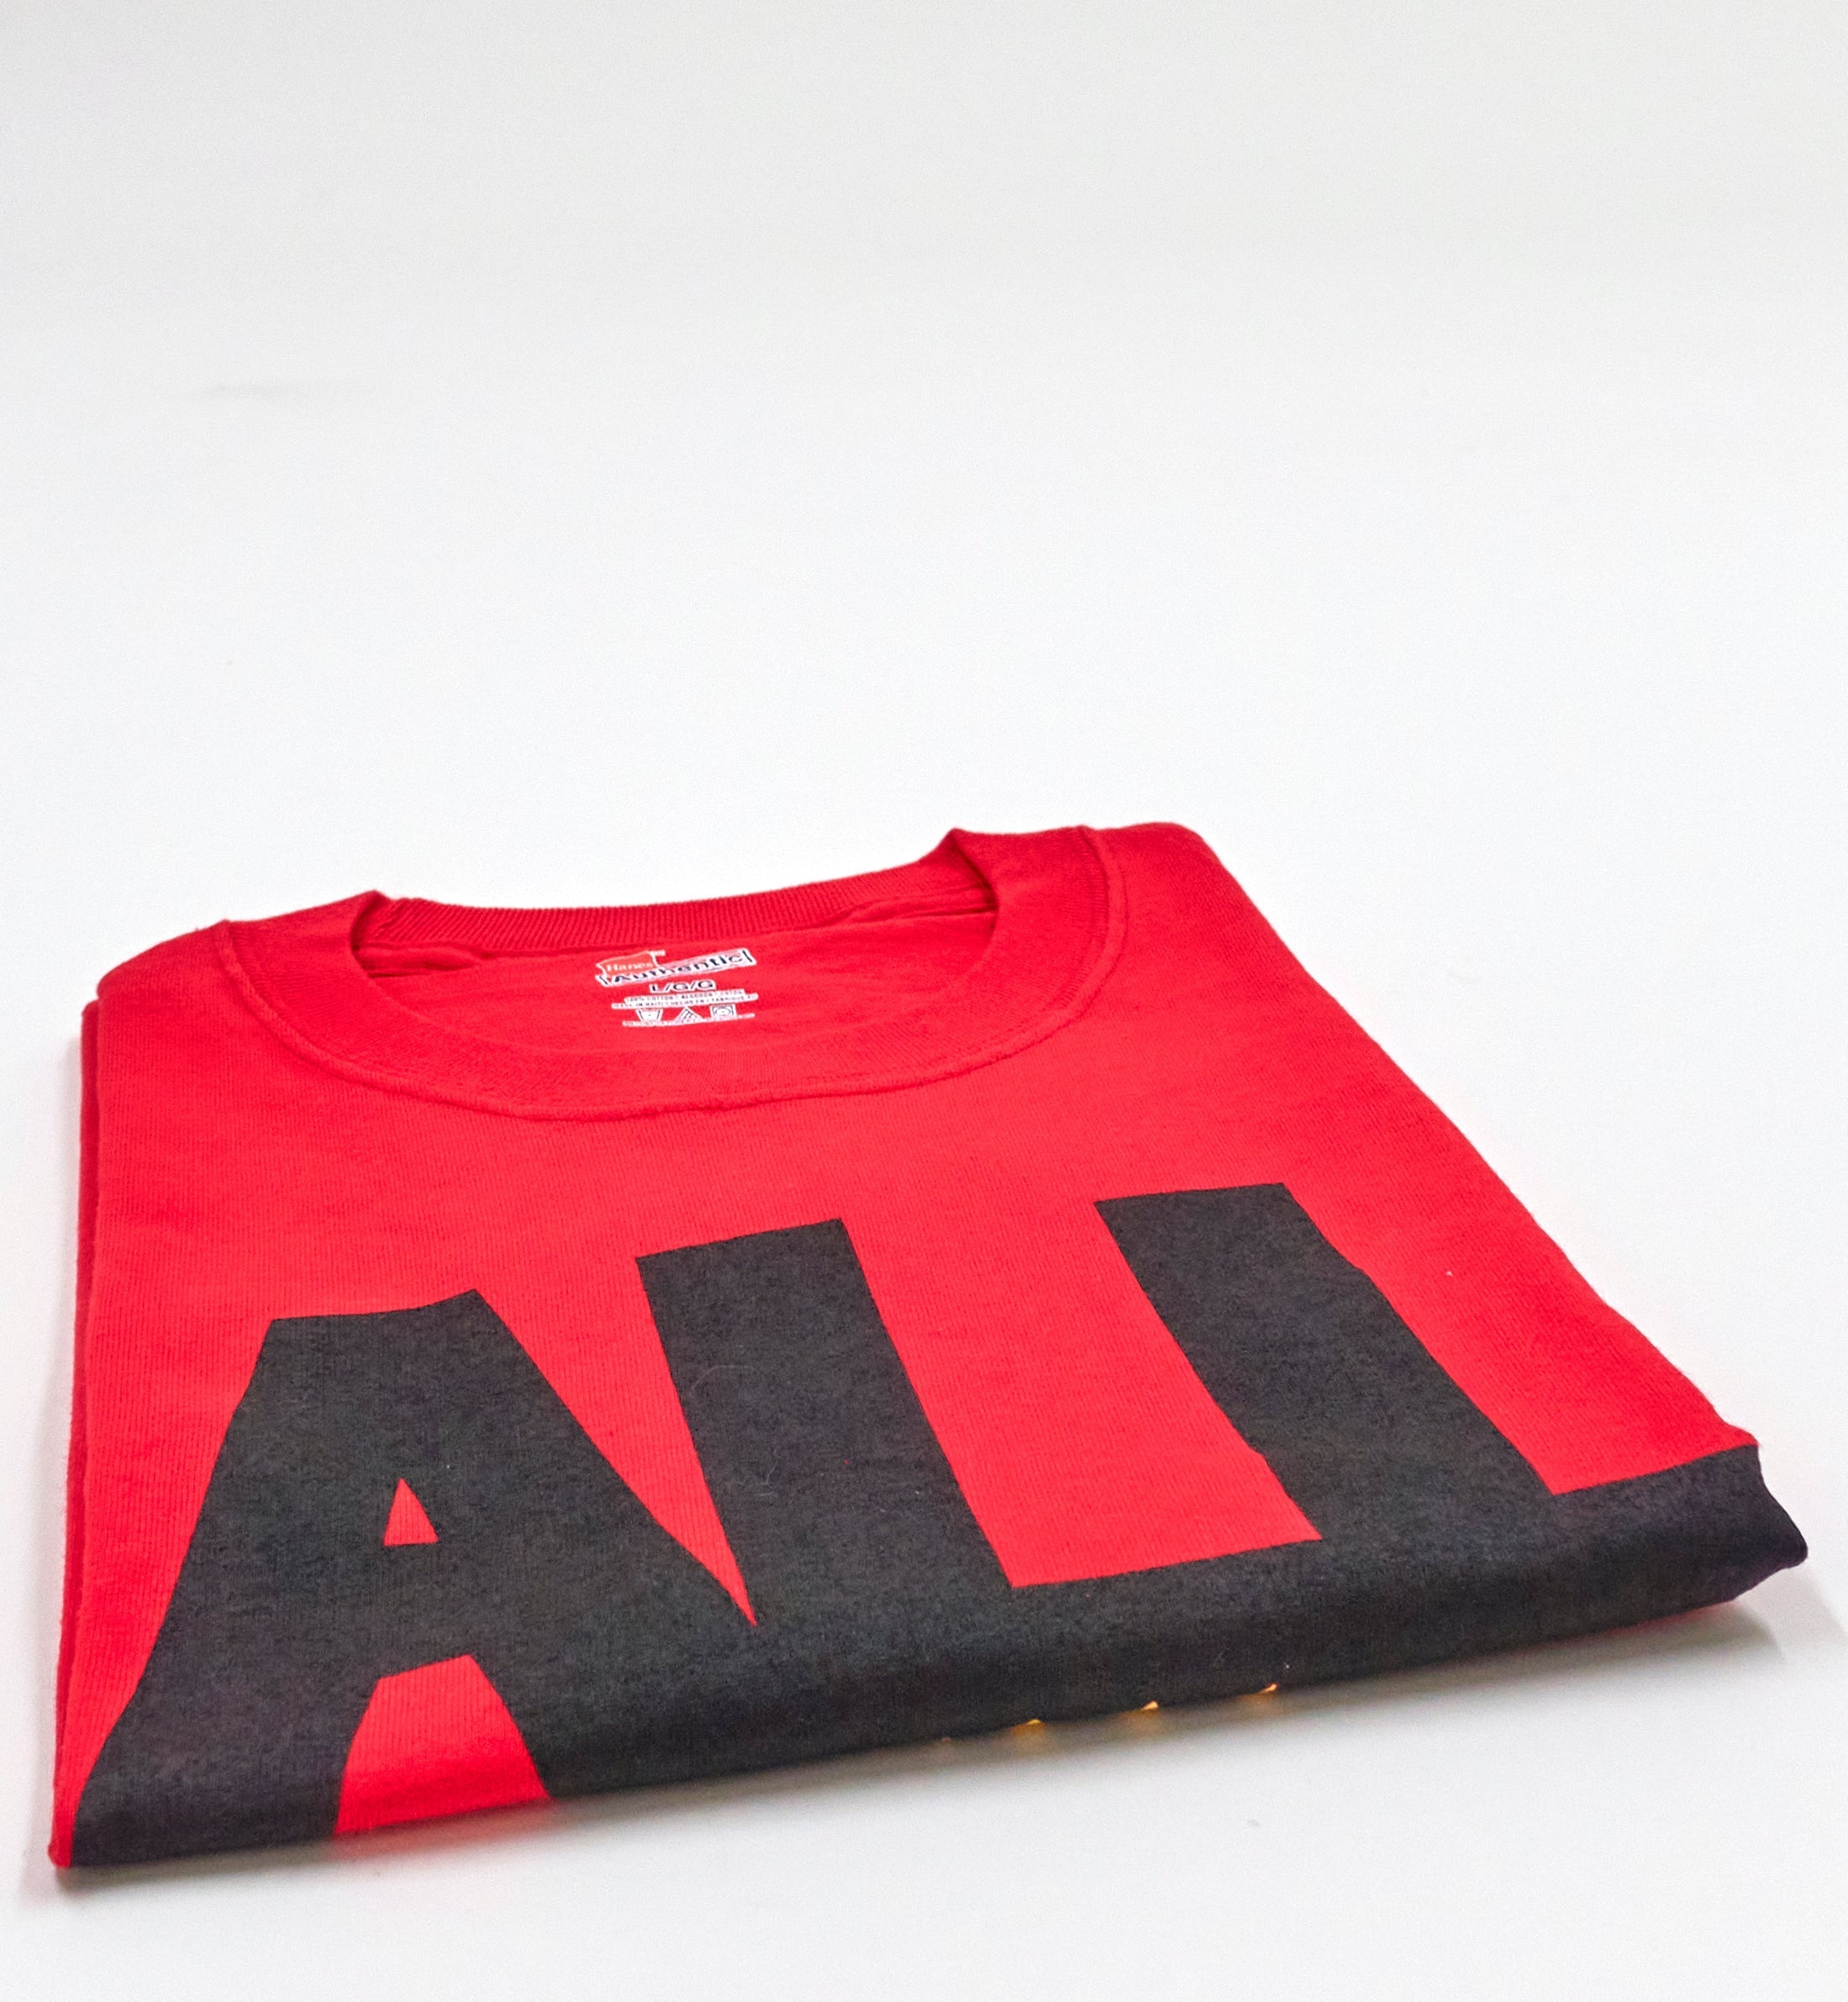 ALL - Allroy Sez... (Big Allroy) 00's SST Superstore Shirt Size Large